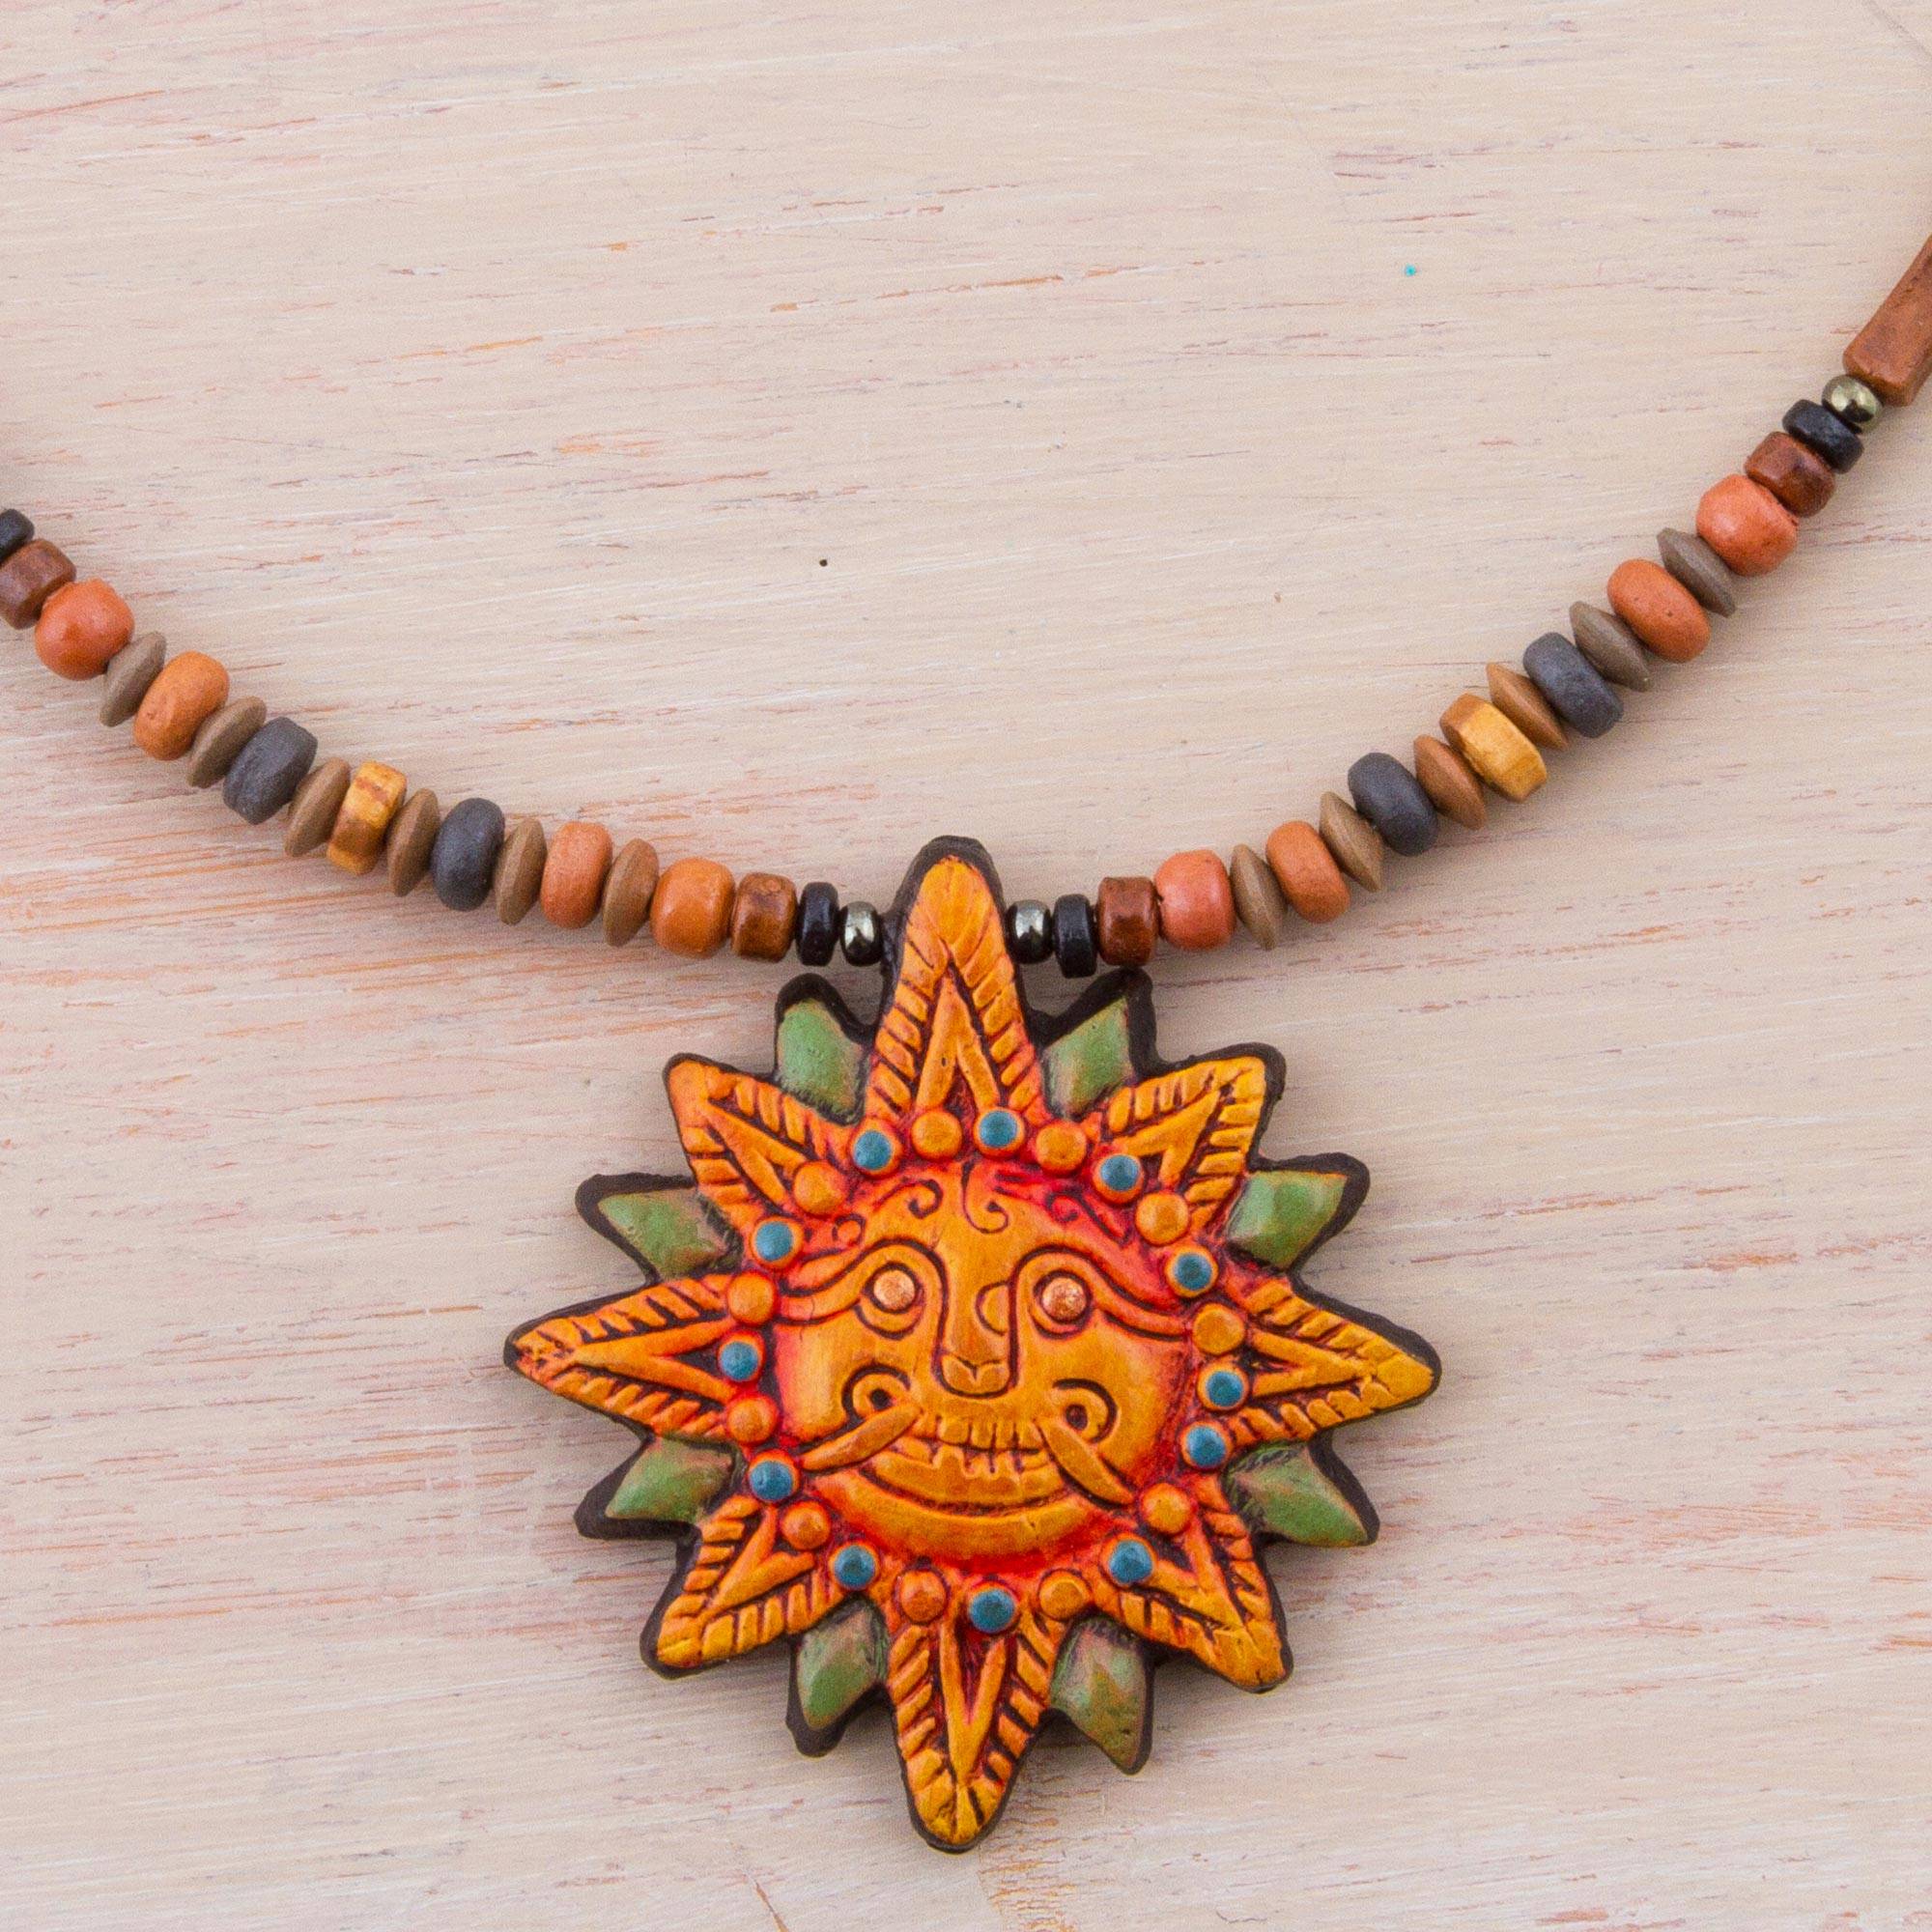 Incan Sun God 925 Sterling Silver and Ceramic Inca Sun Necklace from Peru Peru’s Inti Raymi Festival